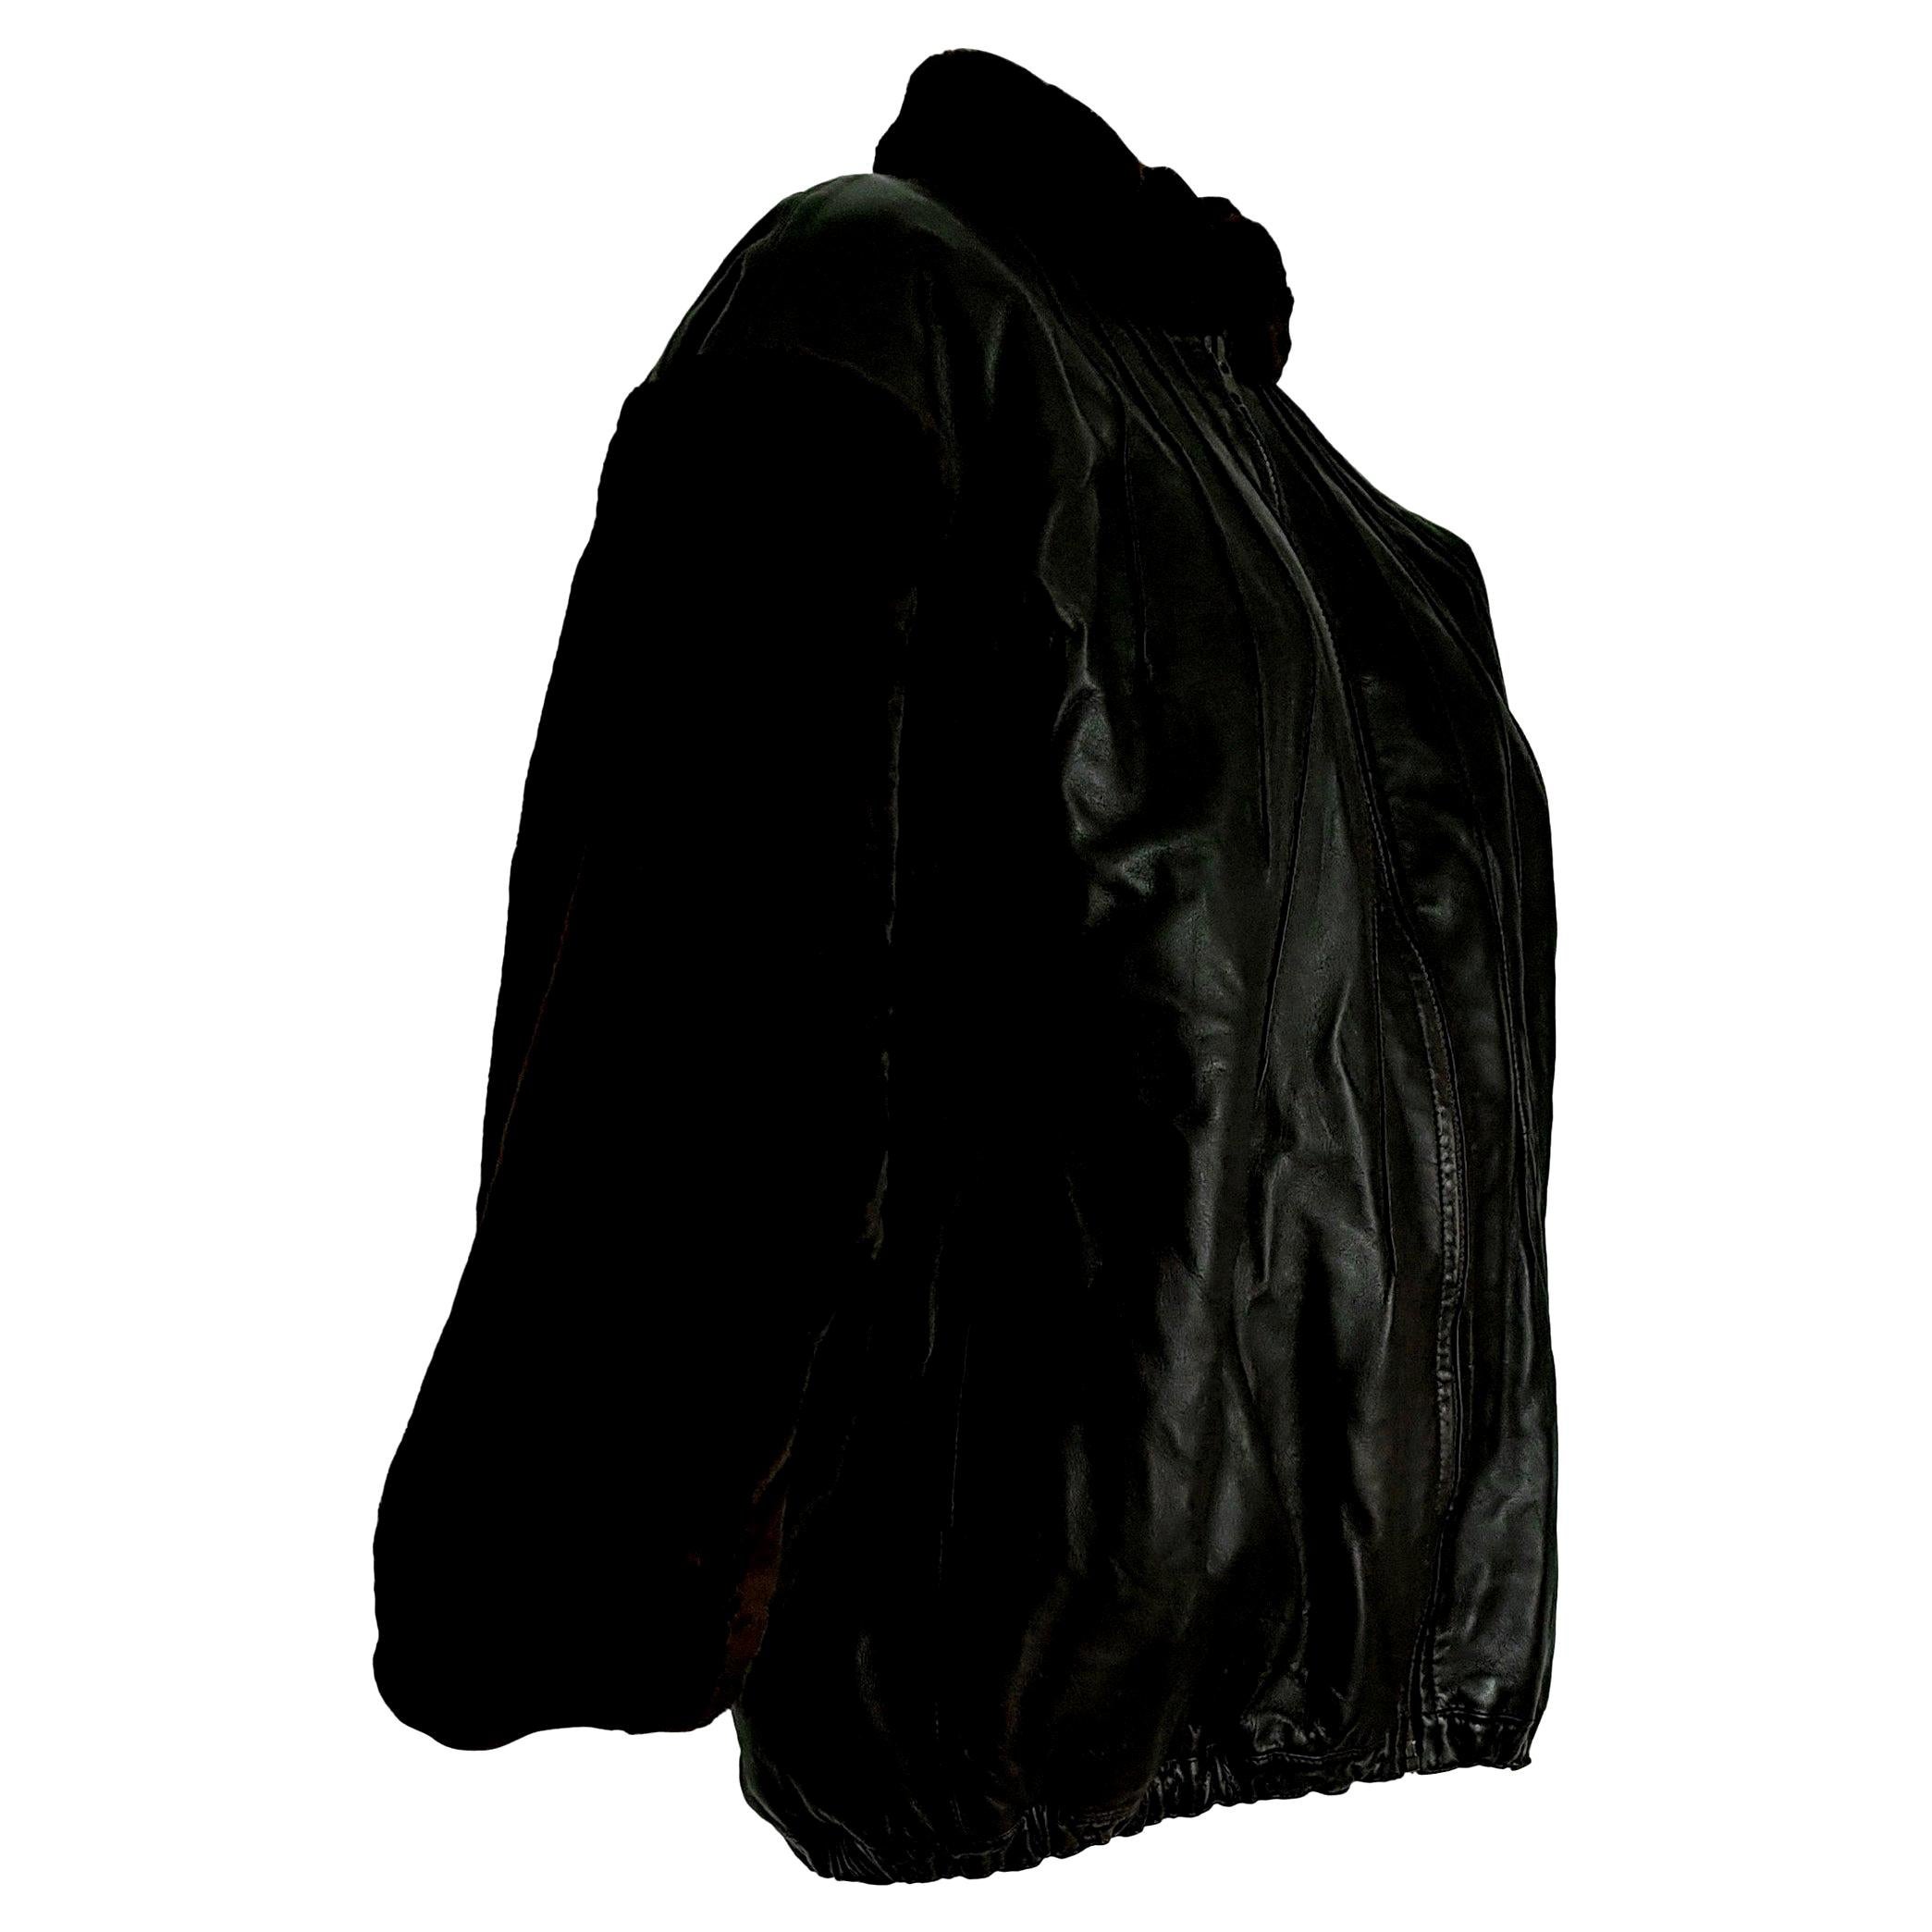 Yves SAINT LAURENT "New" Sleeves Neck Beaver Lambskin Jacket Fur Lined - Unworn For Sale